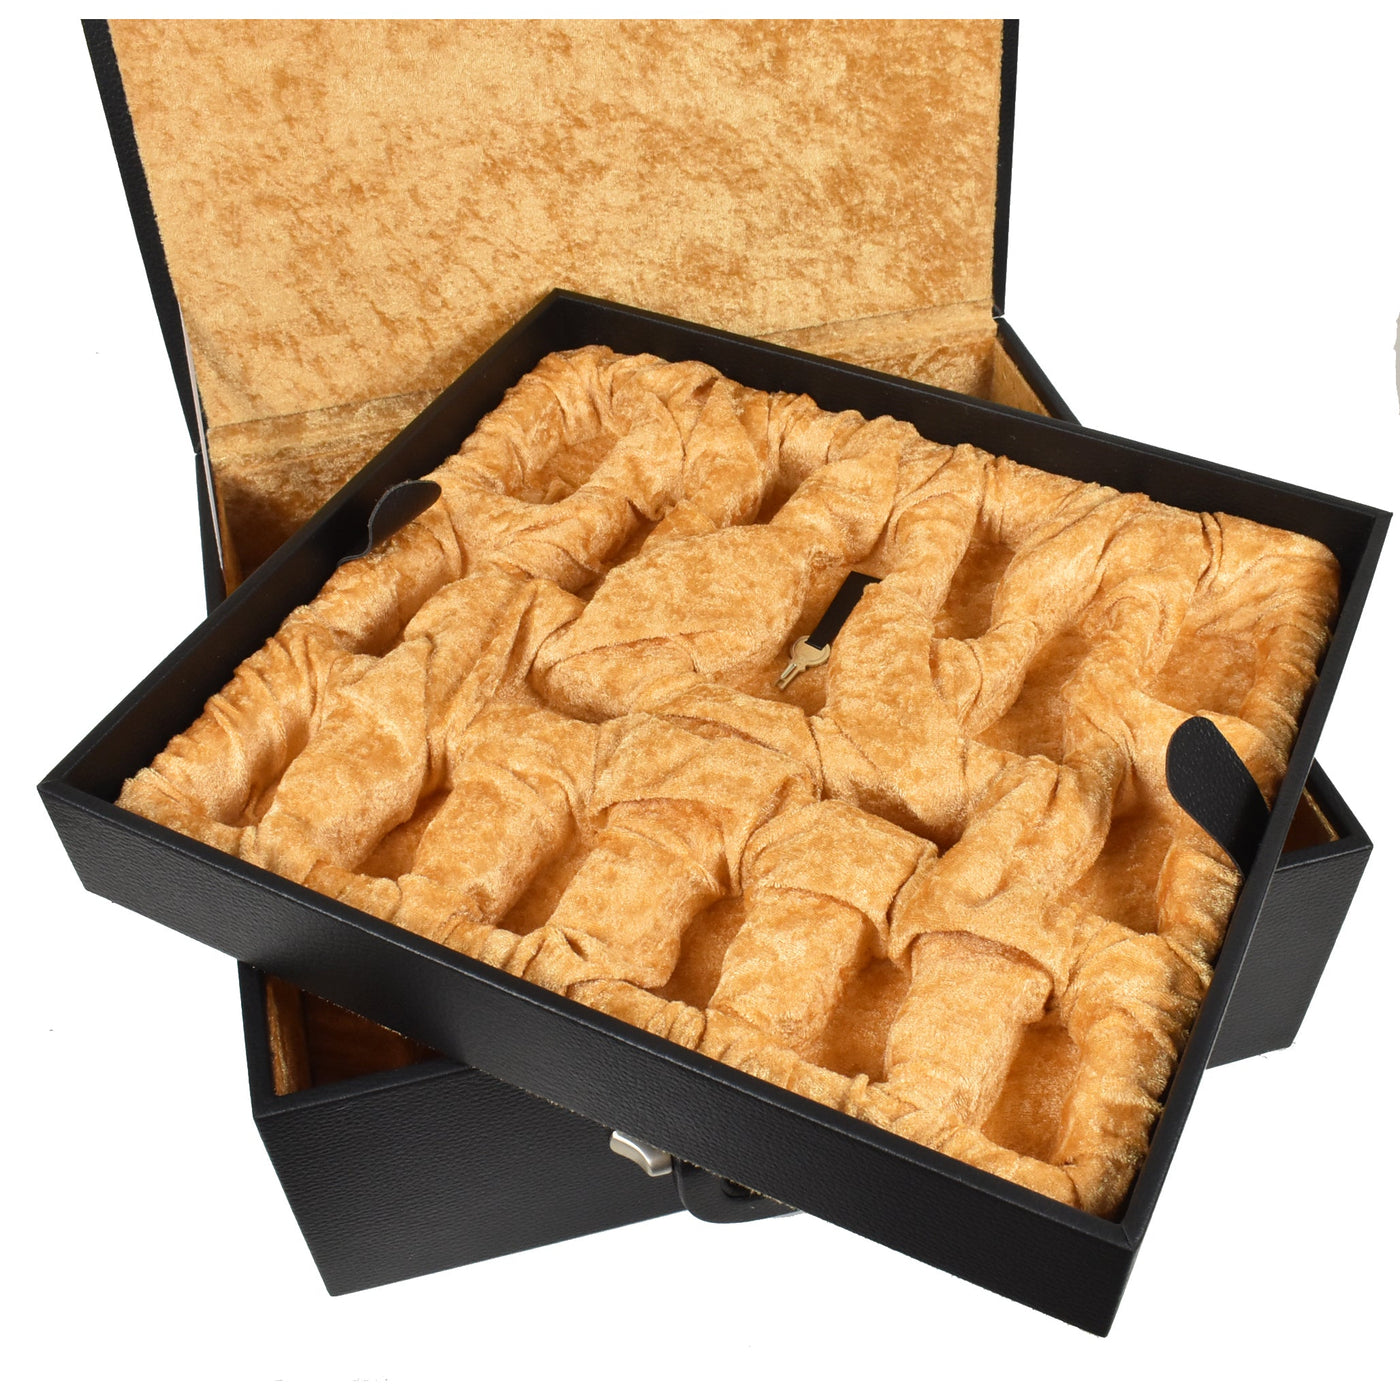 Combo of 4.5" Sheffield Staunton Luxury Chess Set - Pieces in Ebony Wood with 23" Large Ebony & Maple Wood Chessboard  and Storage Box